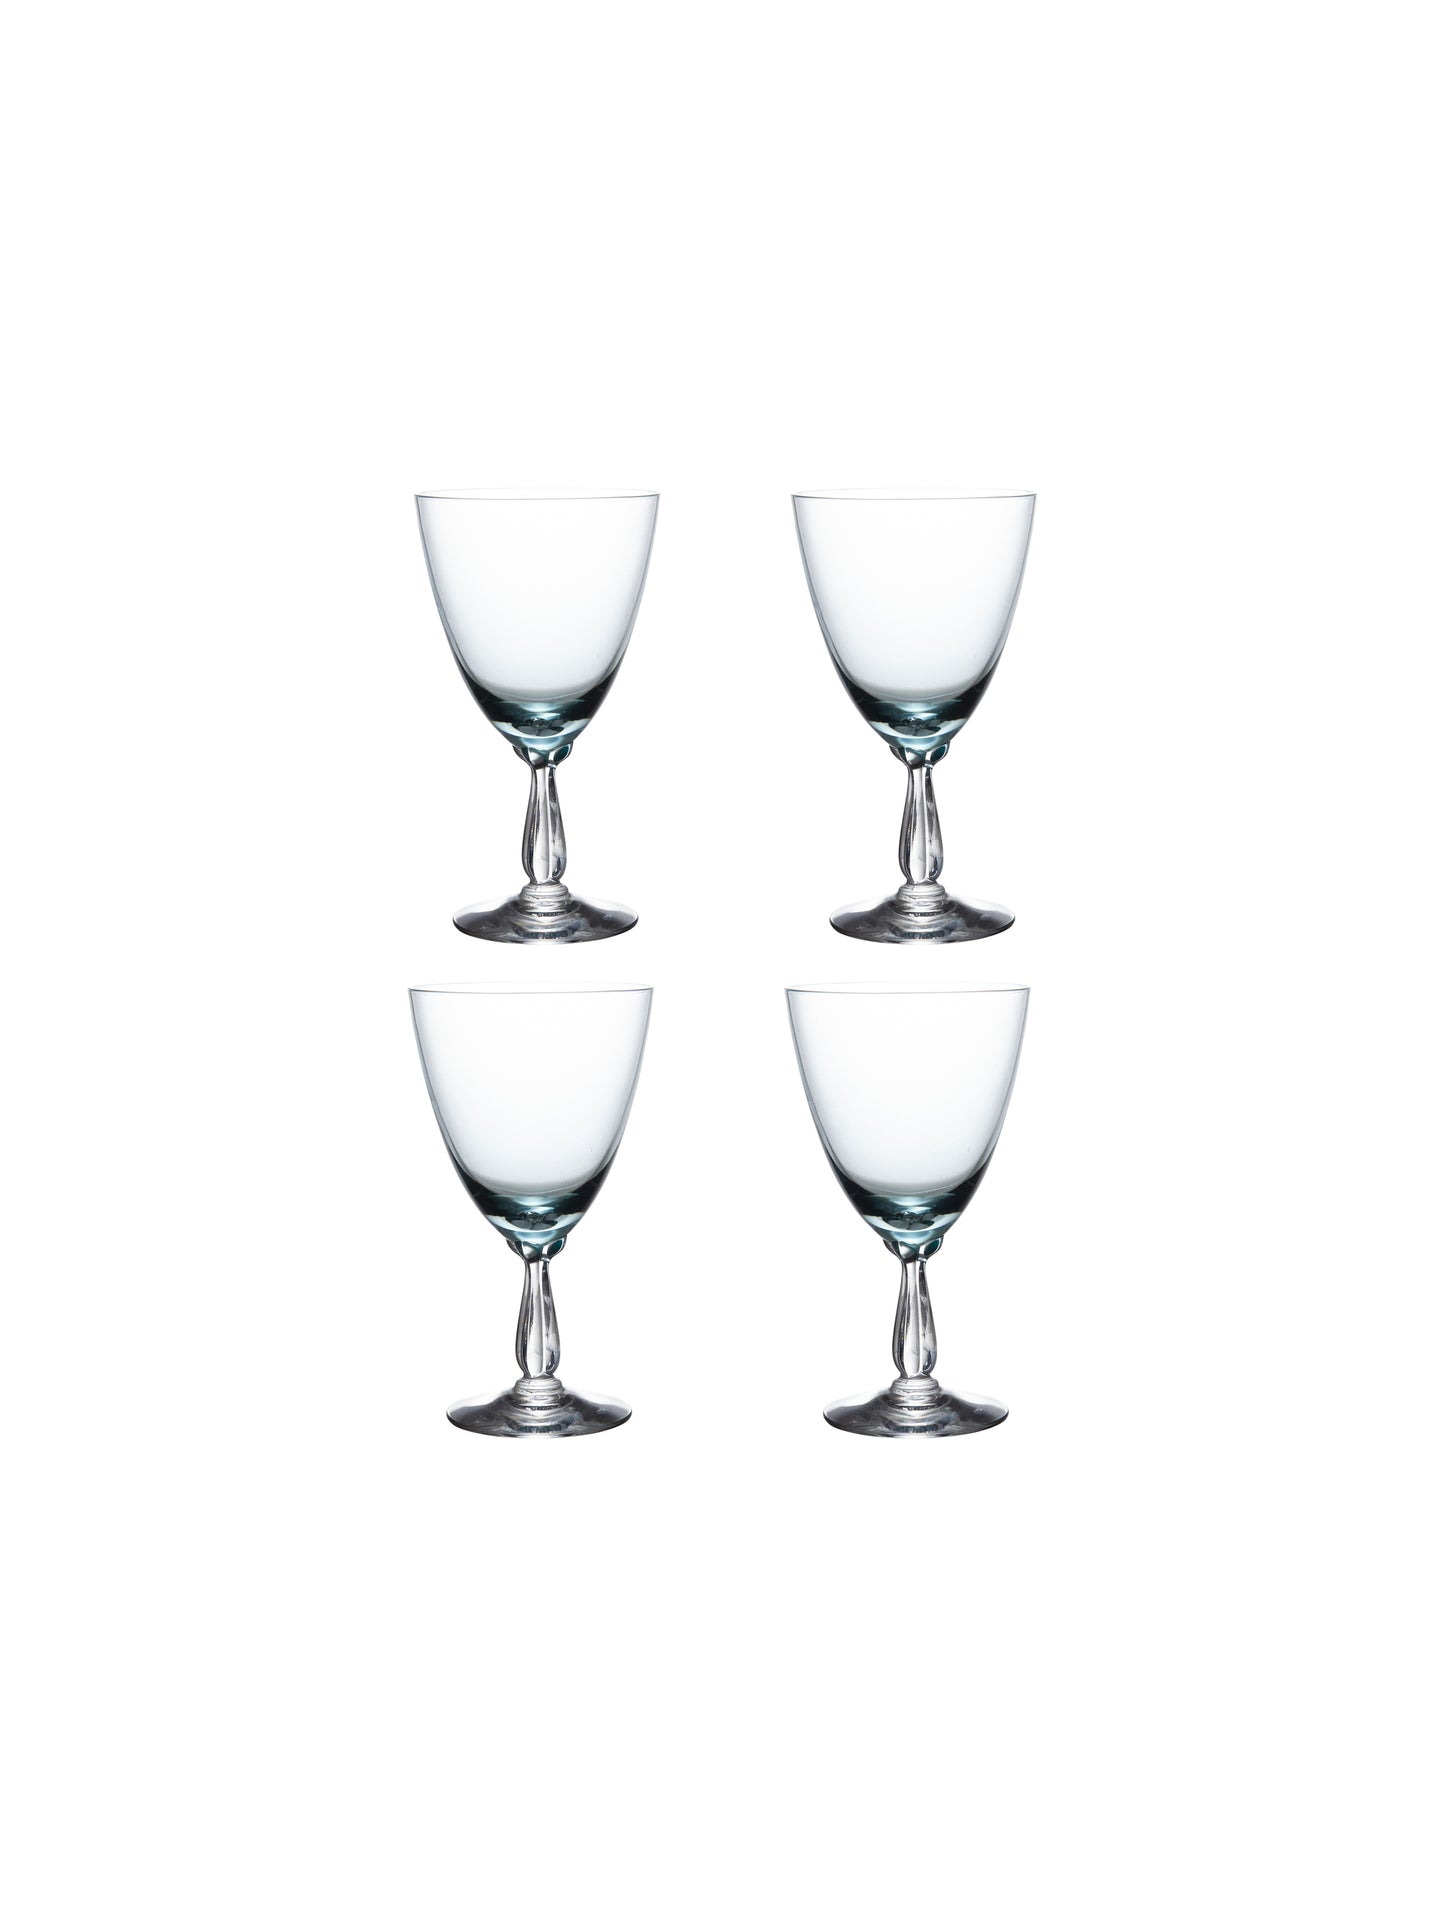 Vintage 1950s Fostoria Rhapsody Glasses Weston Table